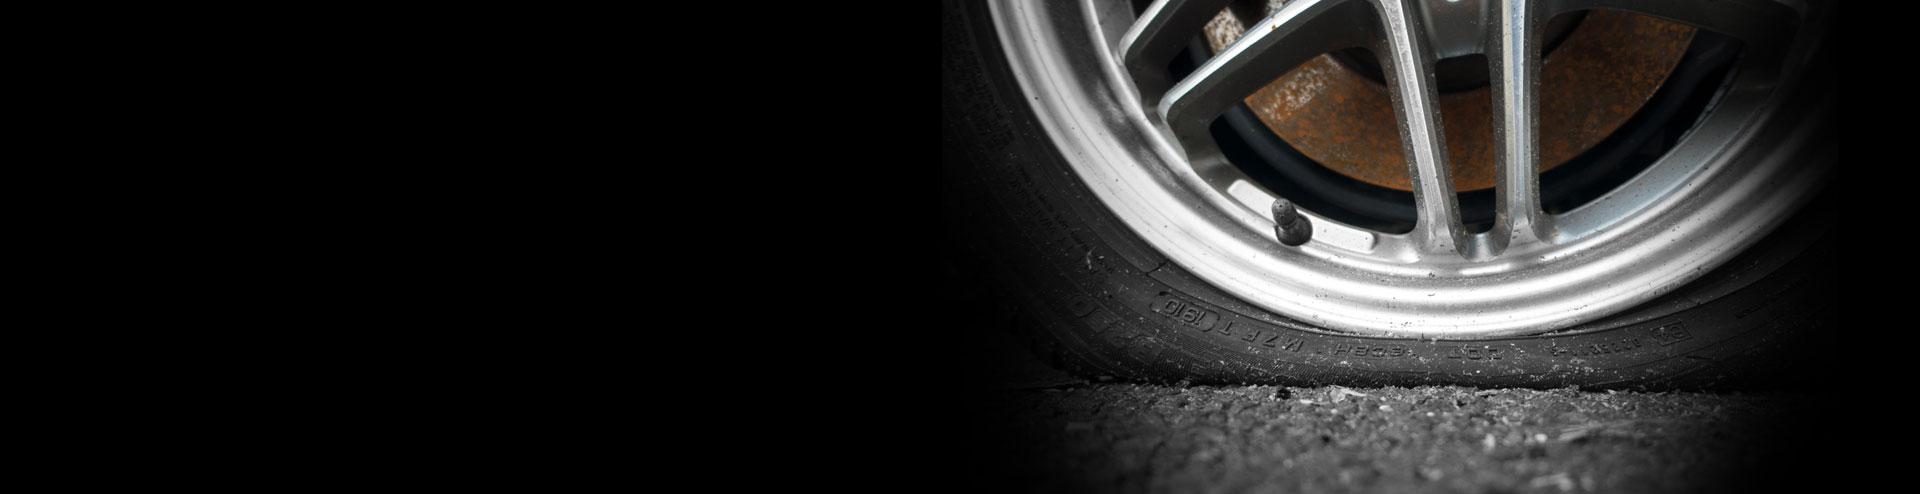 Tire Repair Near Me | Fix a Flat Tire | Tire Repair Shops